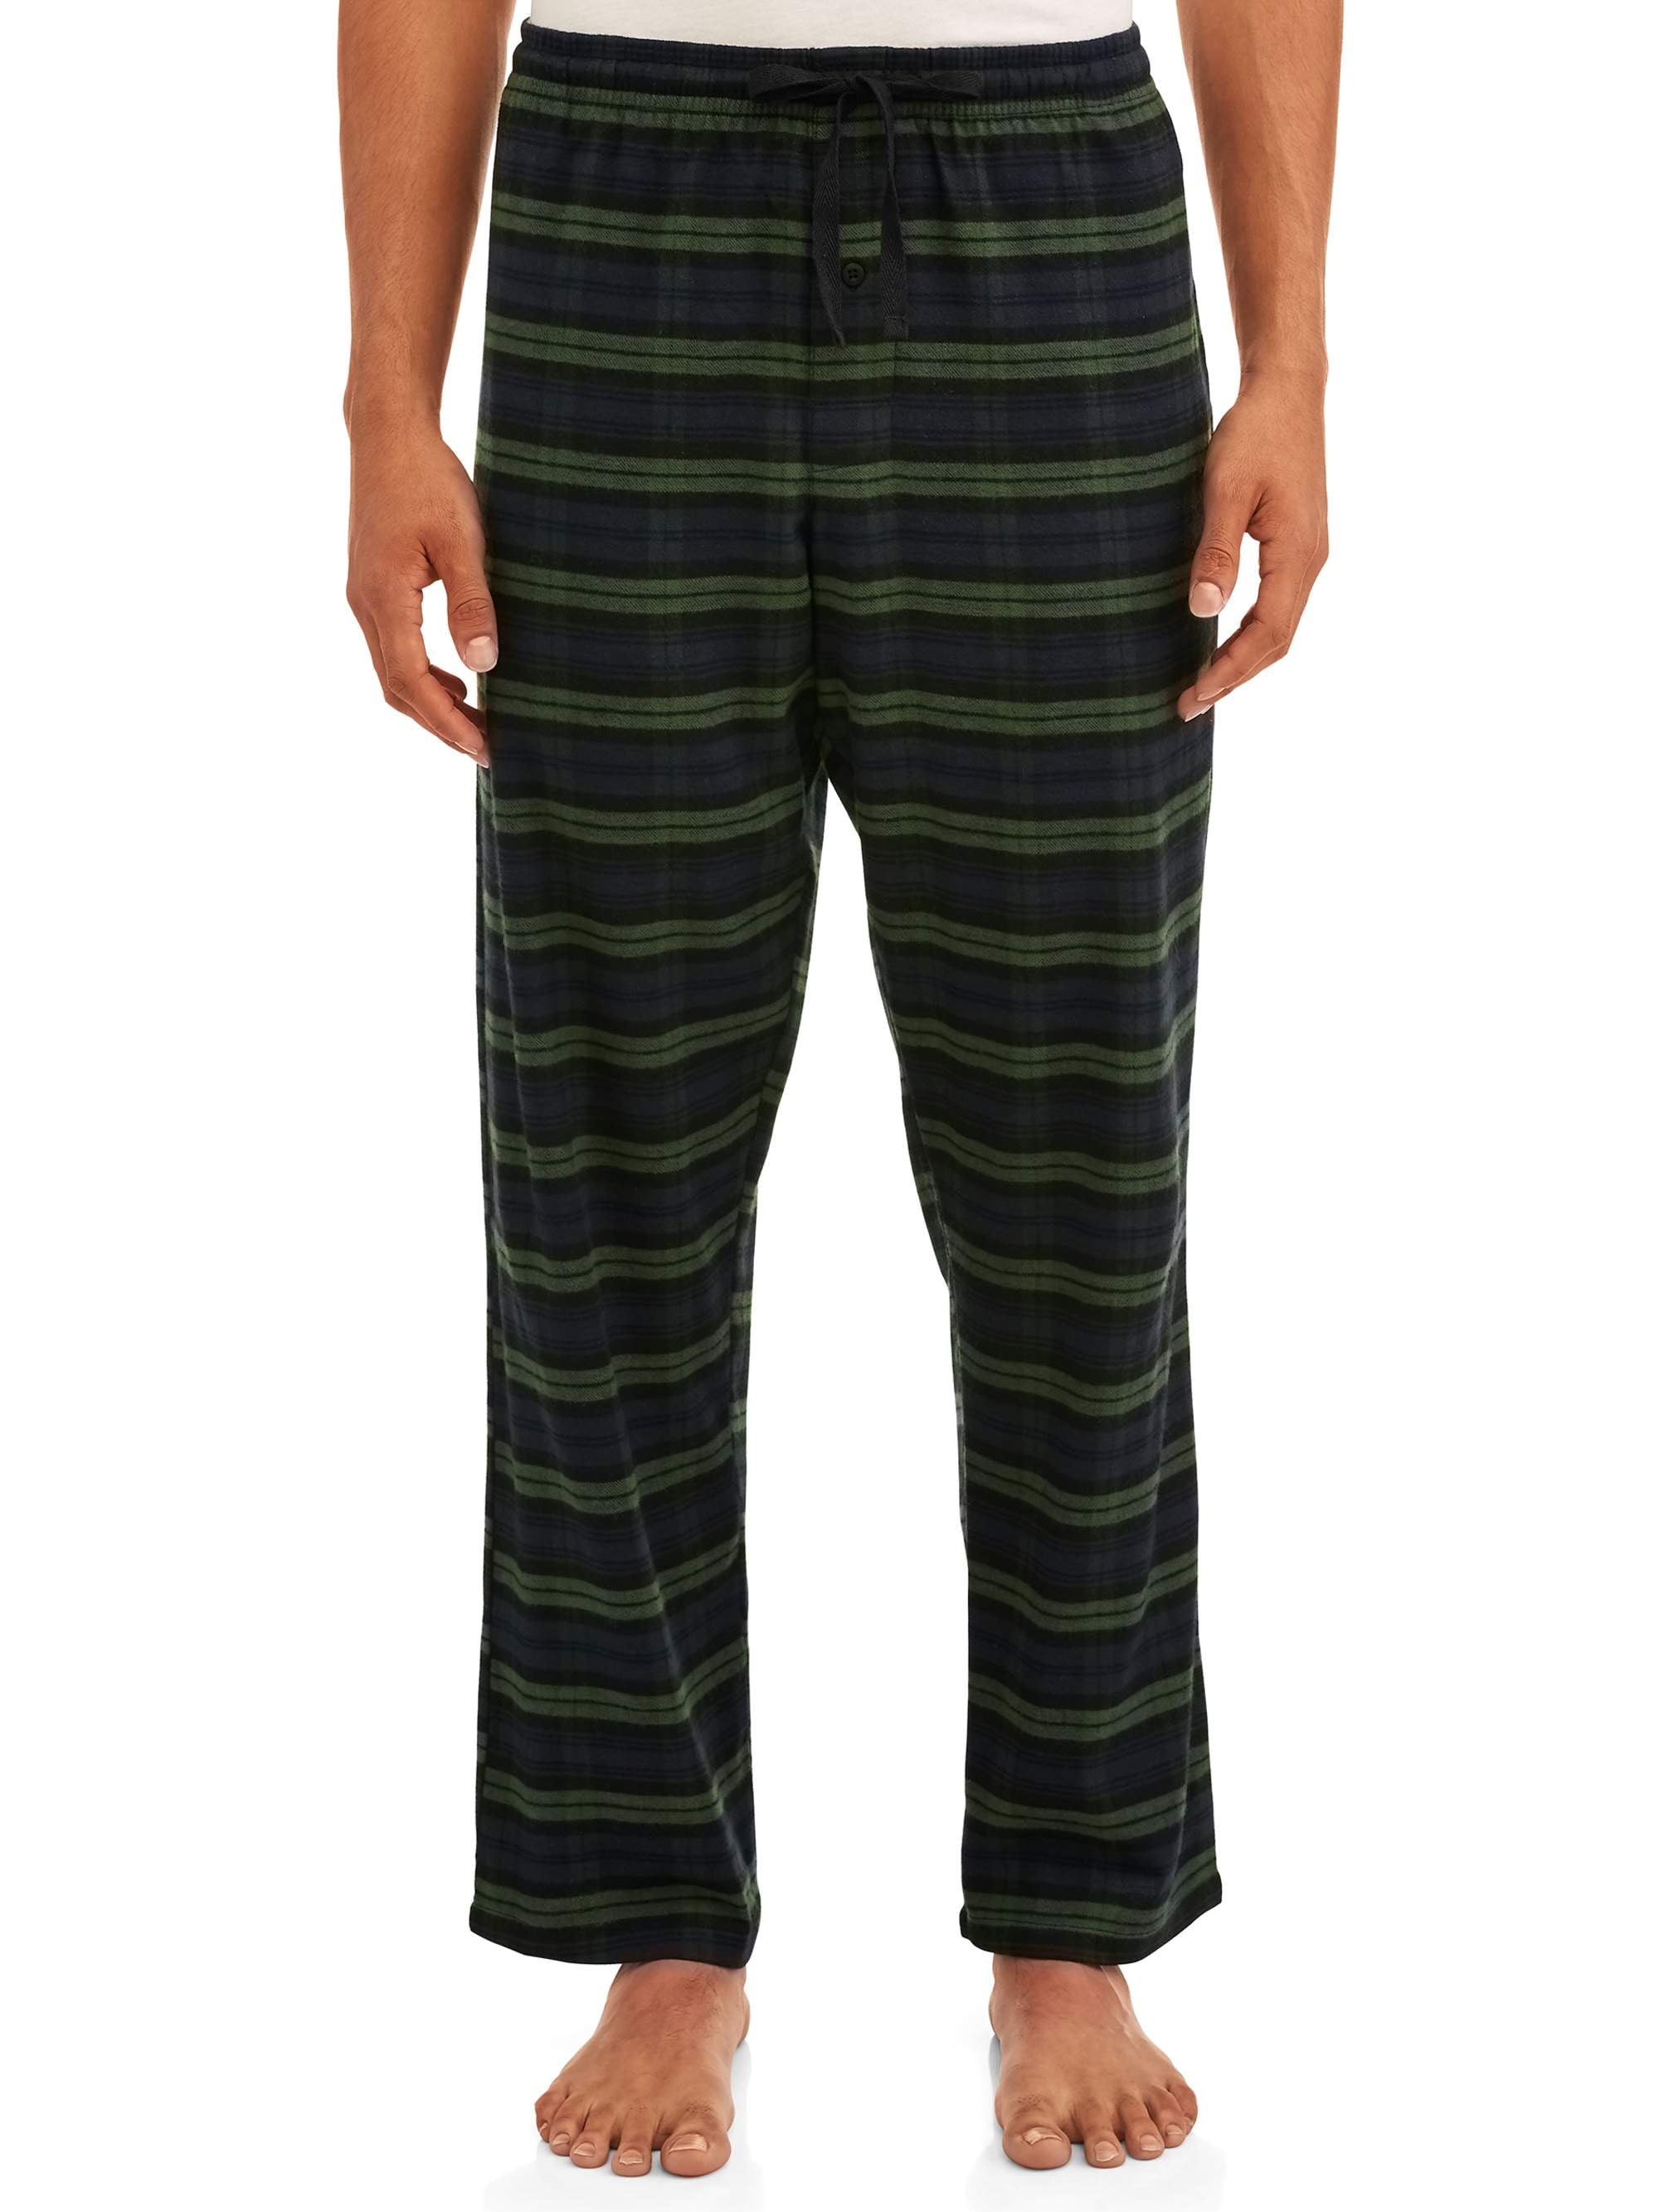 Hanes Men's Stretch Flannel Pant - Walmart.com